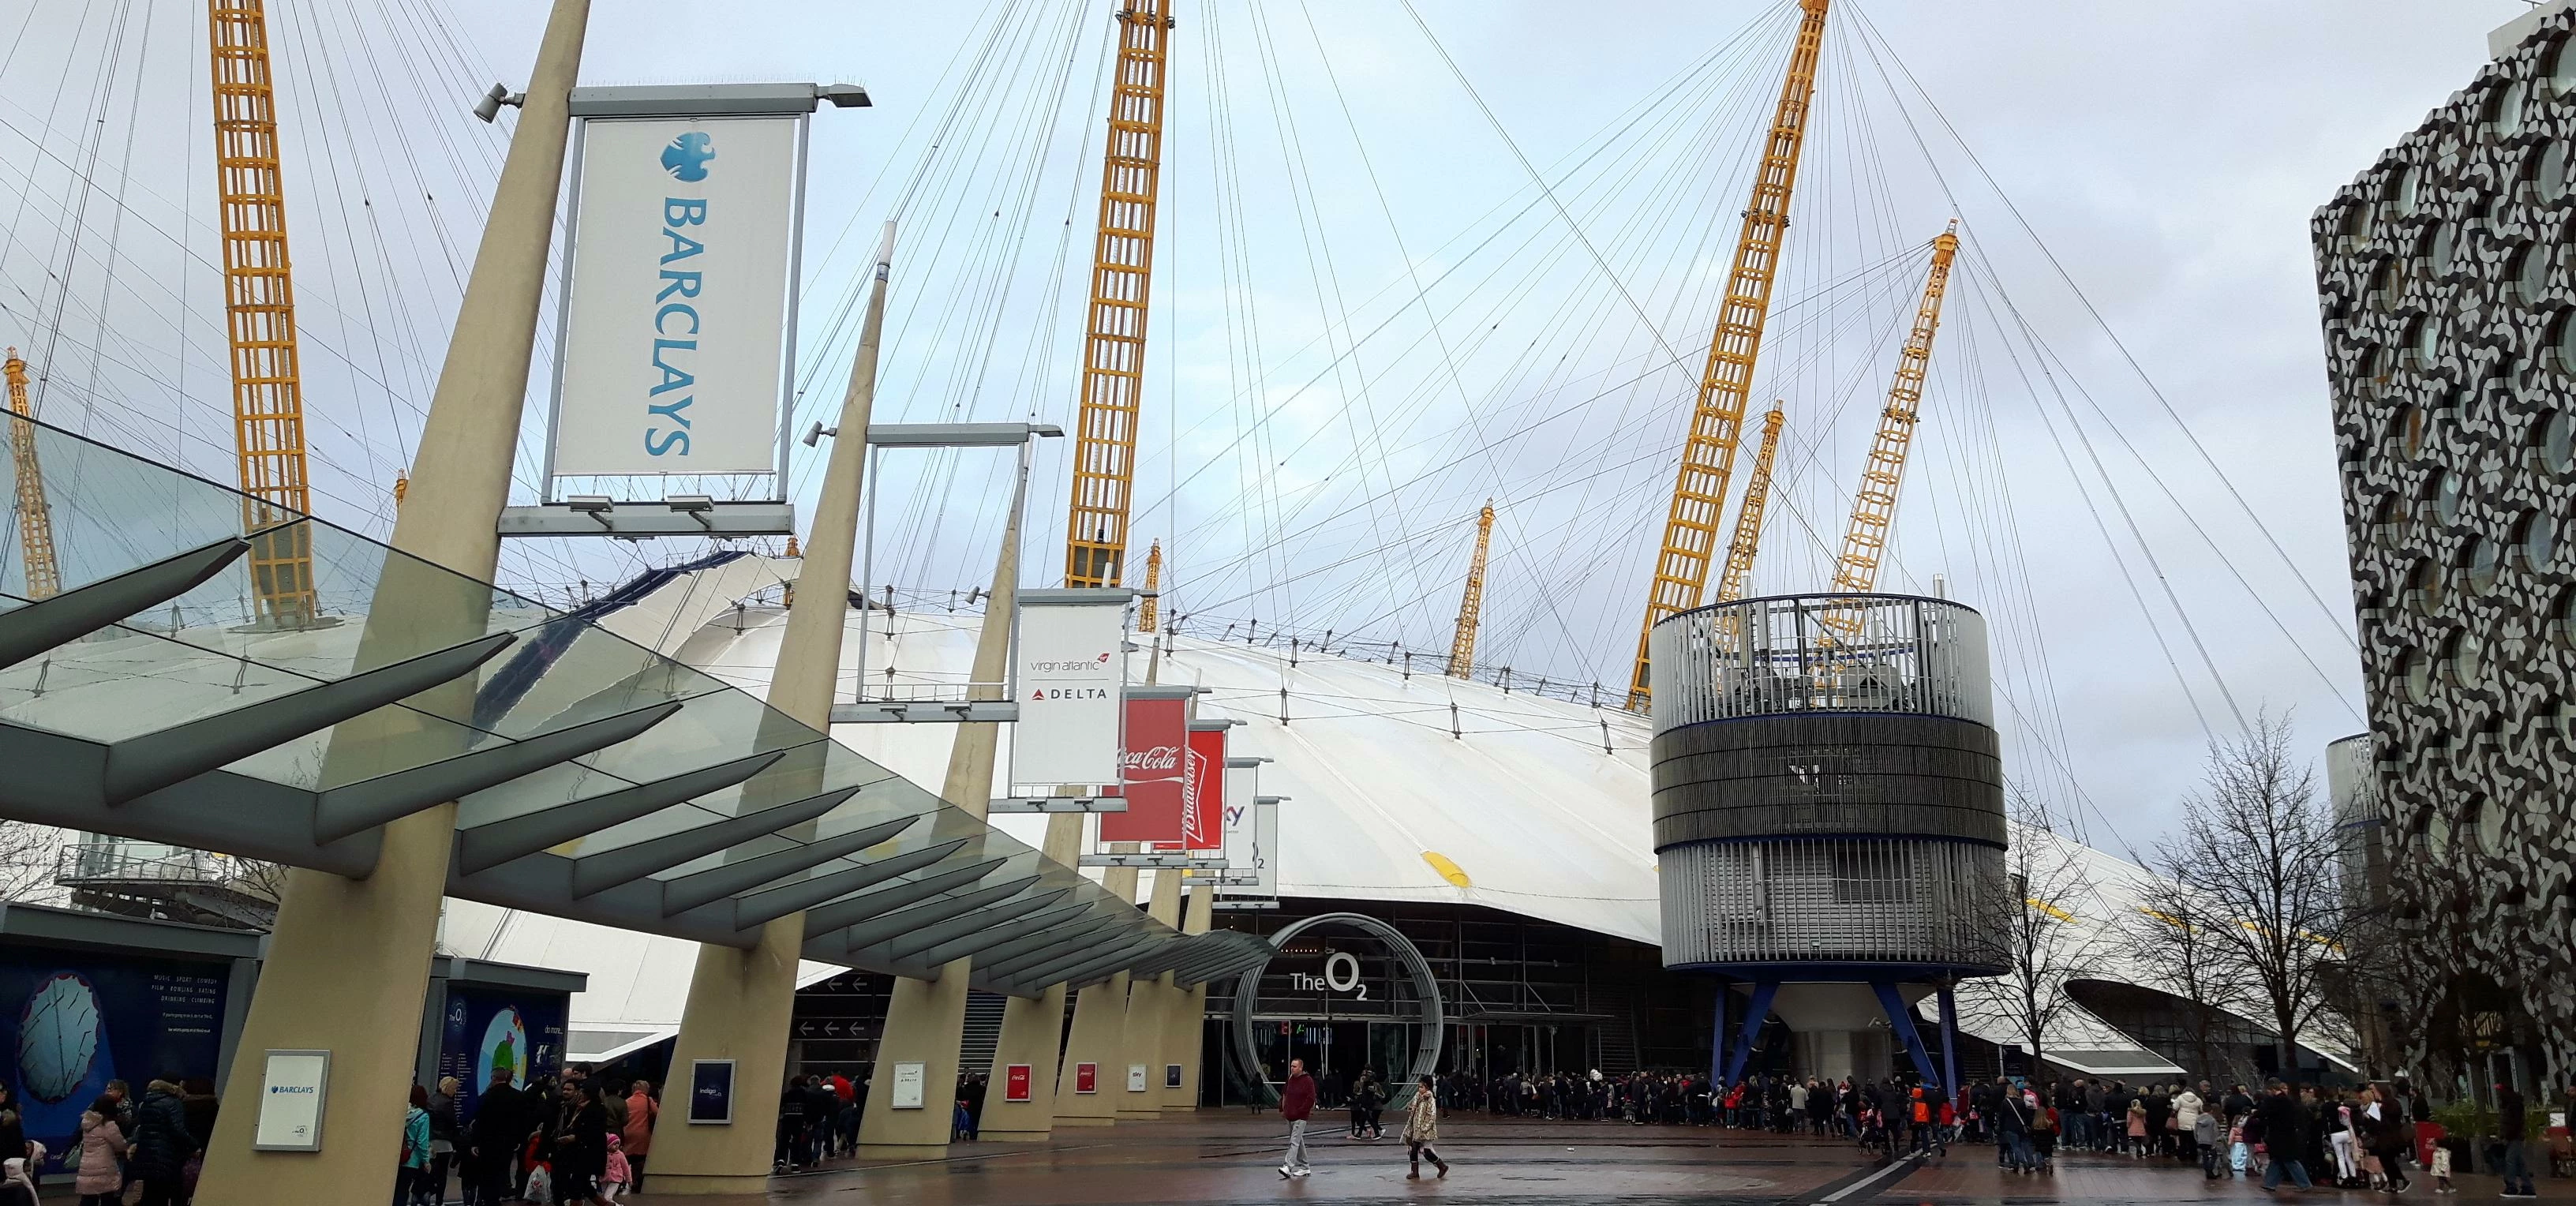 The O2 arena london